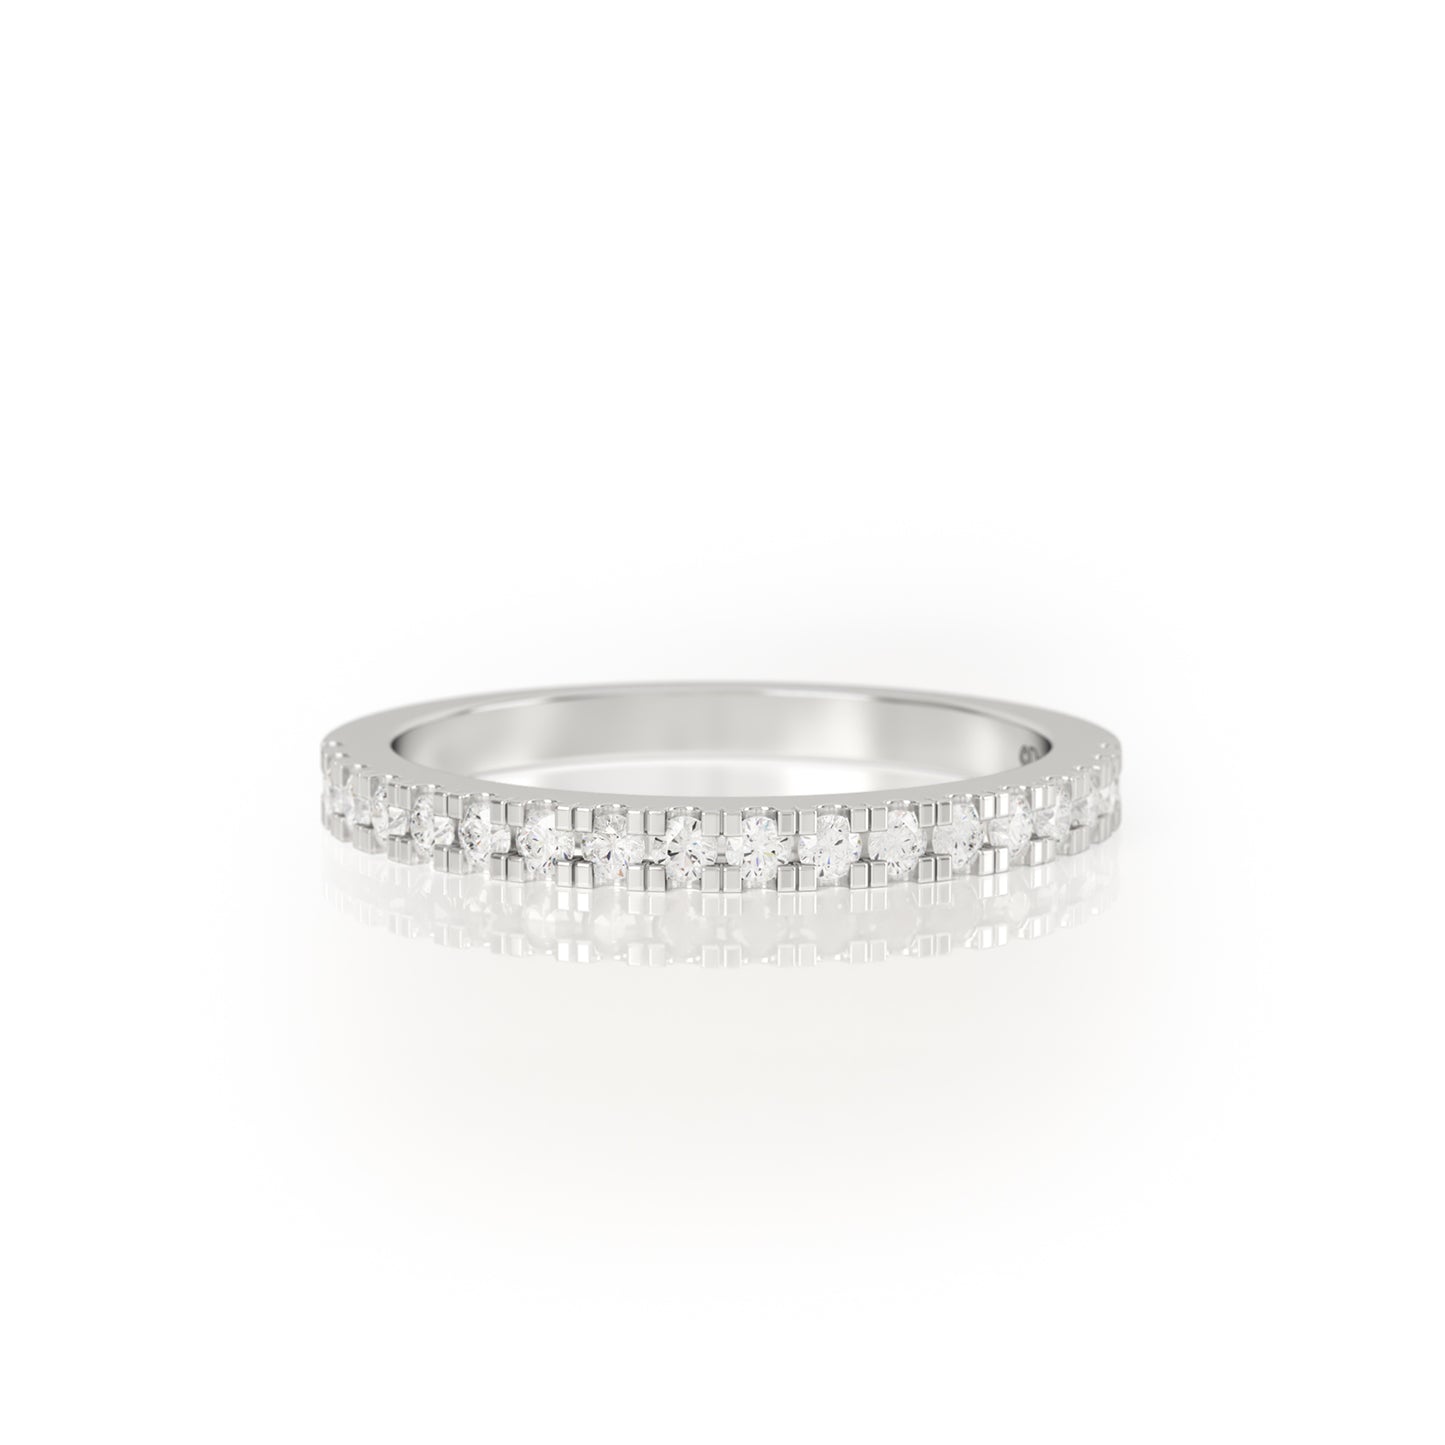 SYNERGI Classic Diamond Eternity Ring 0.33cts luxurious round brilliant diamonds in Platinum- Avila Vara 